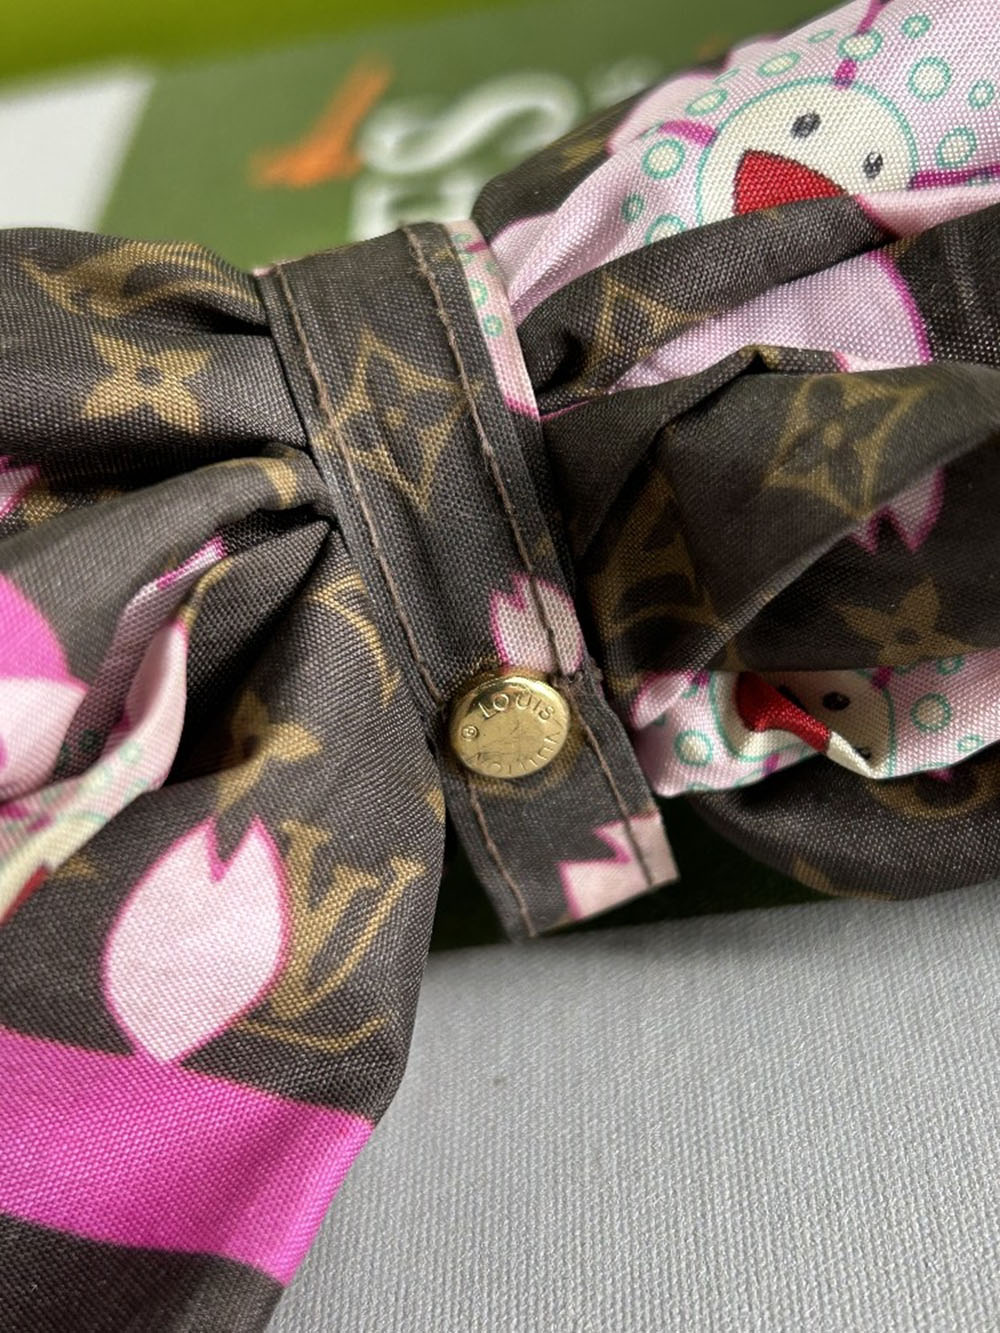 Louis Vuitton Paris Cherry Blossom Monogram Limited Edition Umbrella - Image 4 of 12